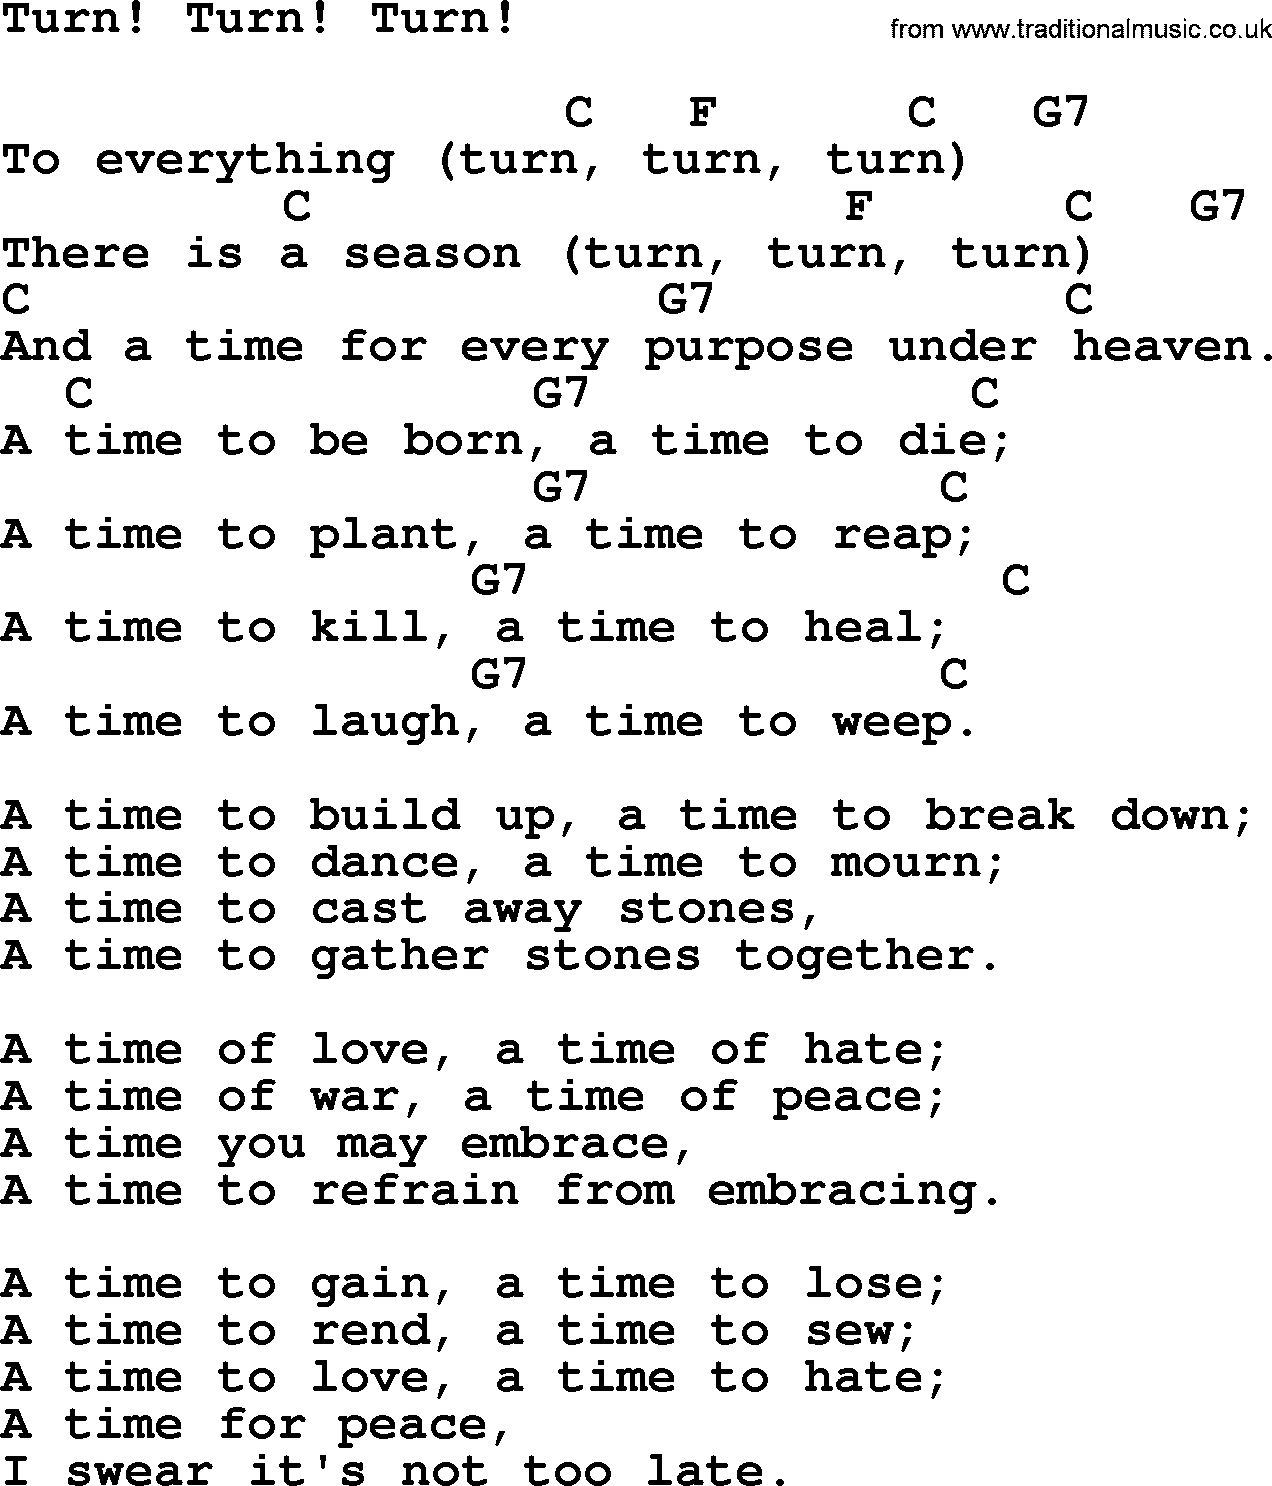 Pete Seeger song Turn! Turn! Turn!, lyrics and chords